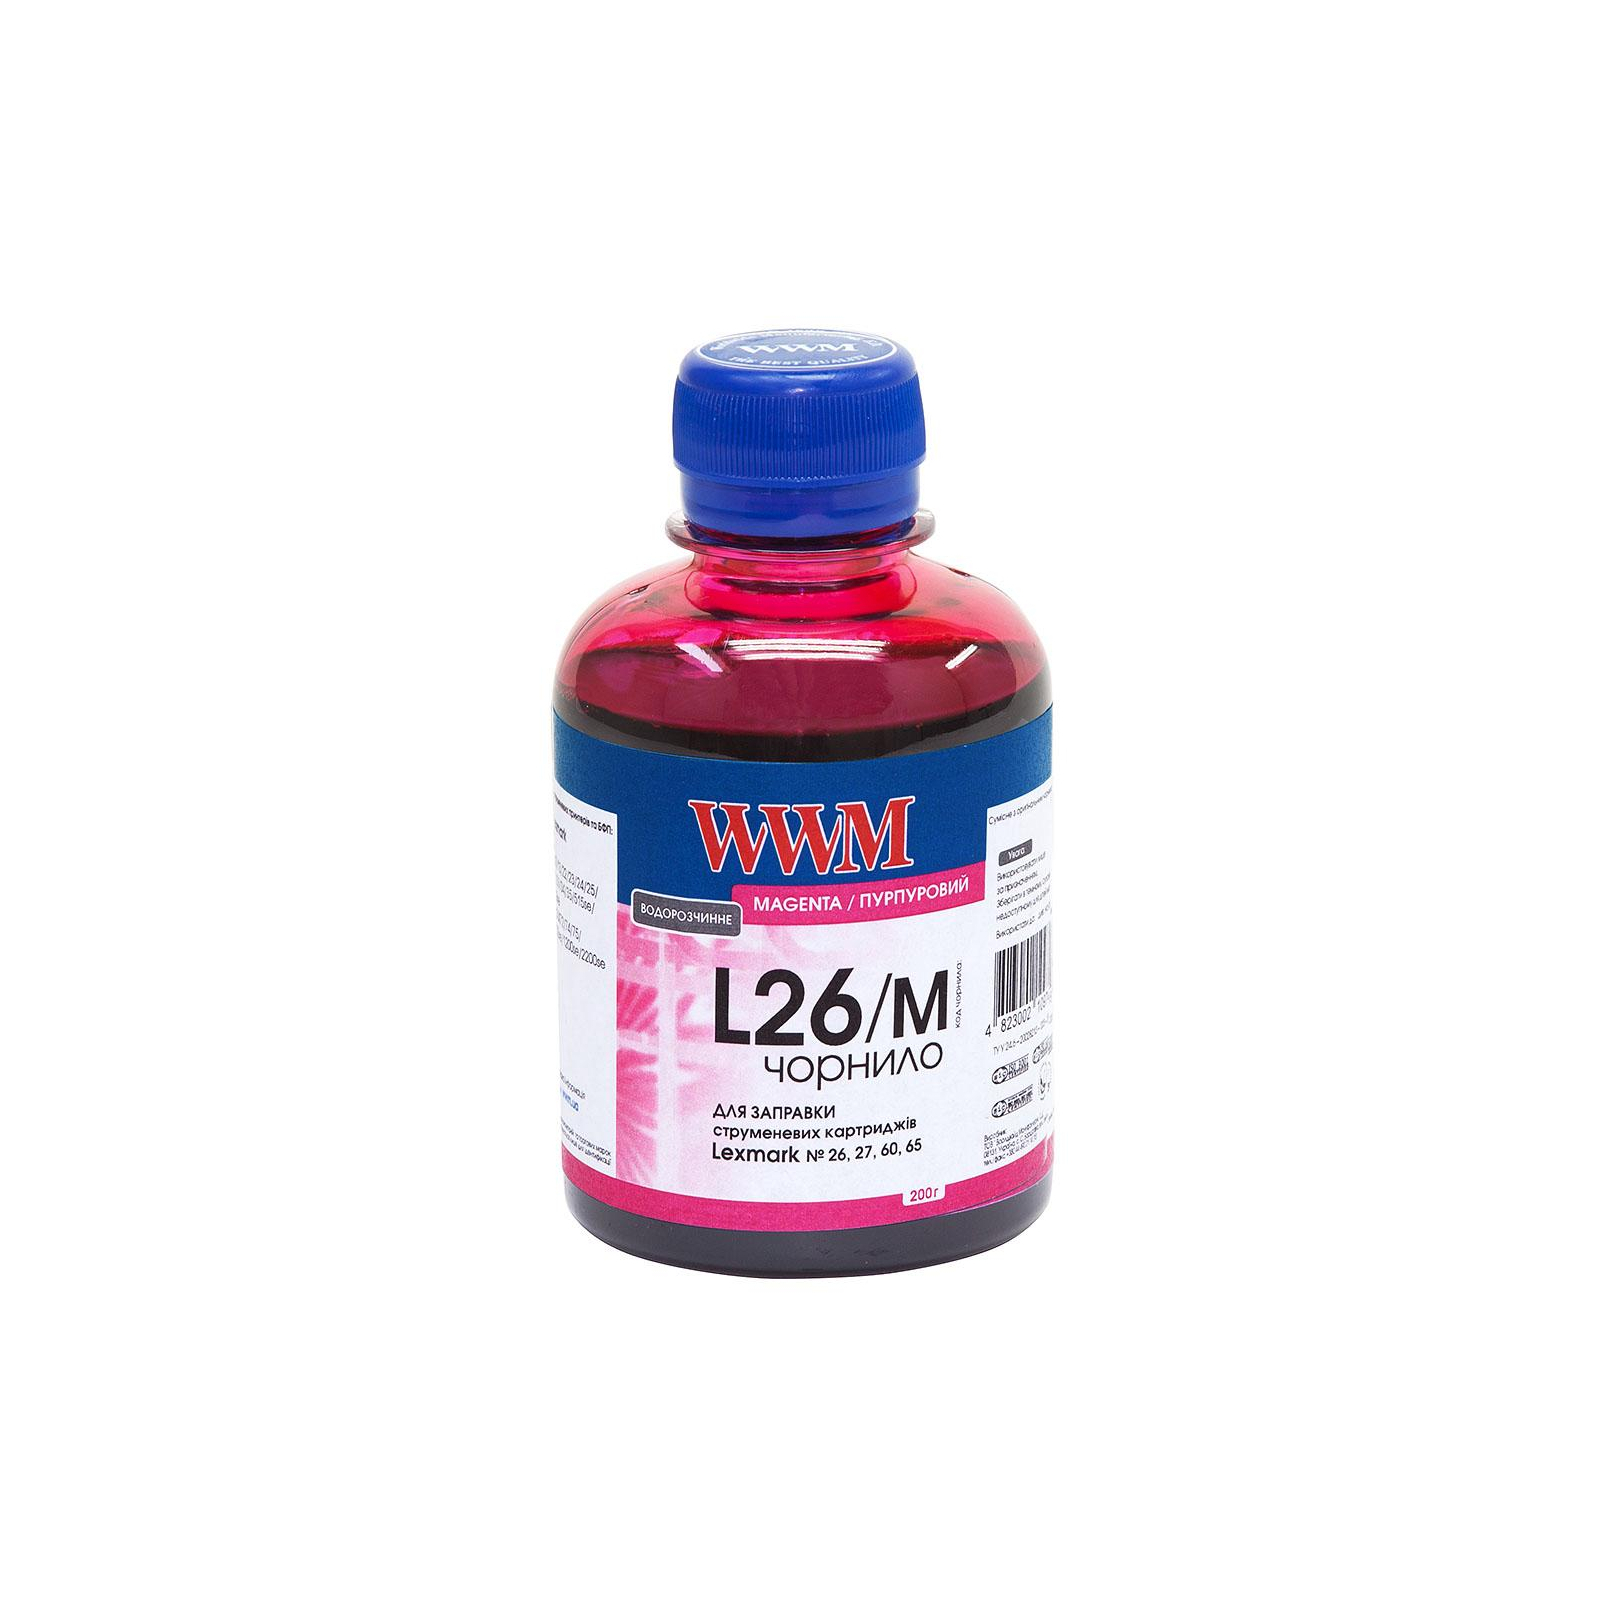 Чернила WWM Lexmark 26/27(10N0026/0227)Magenta (L26/M)